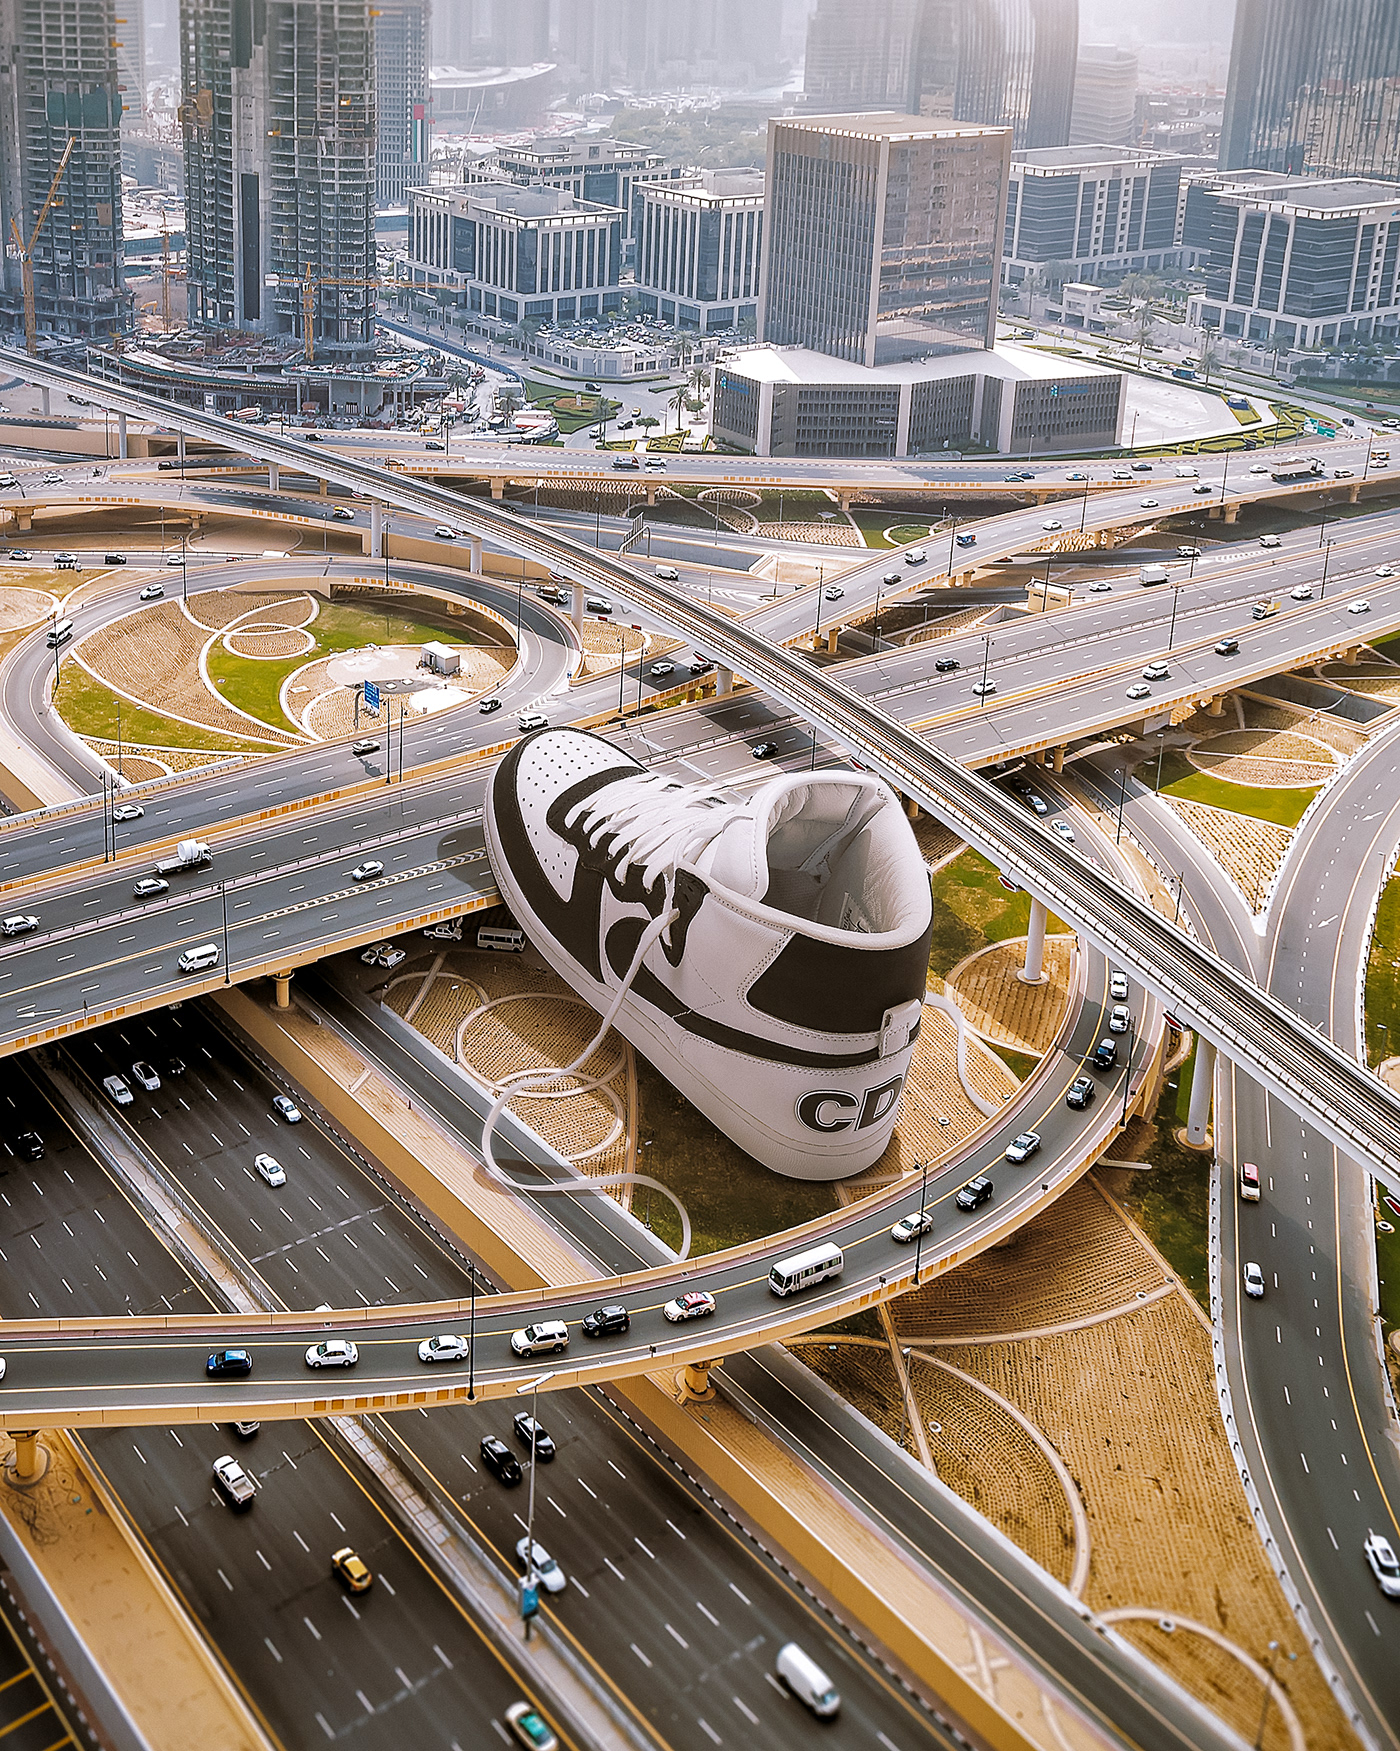 Giant sneaker photo composite in Dubai. Retouching using Photoshop